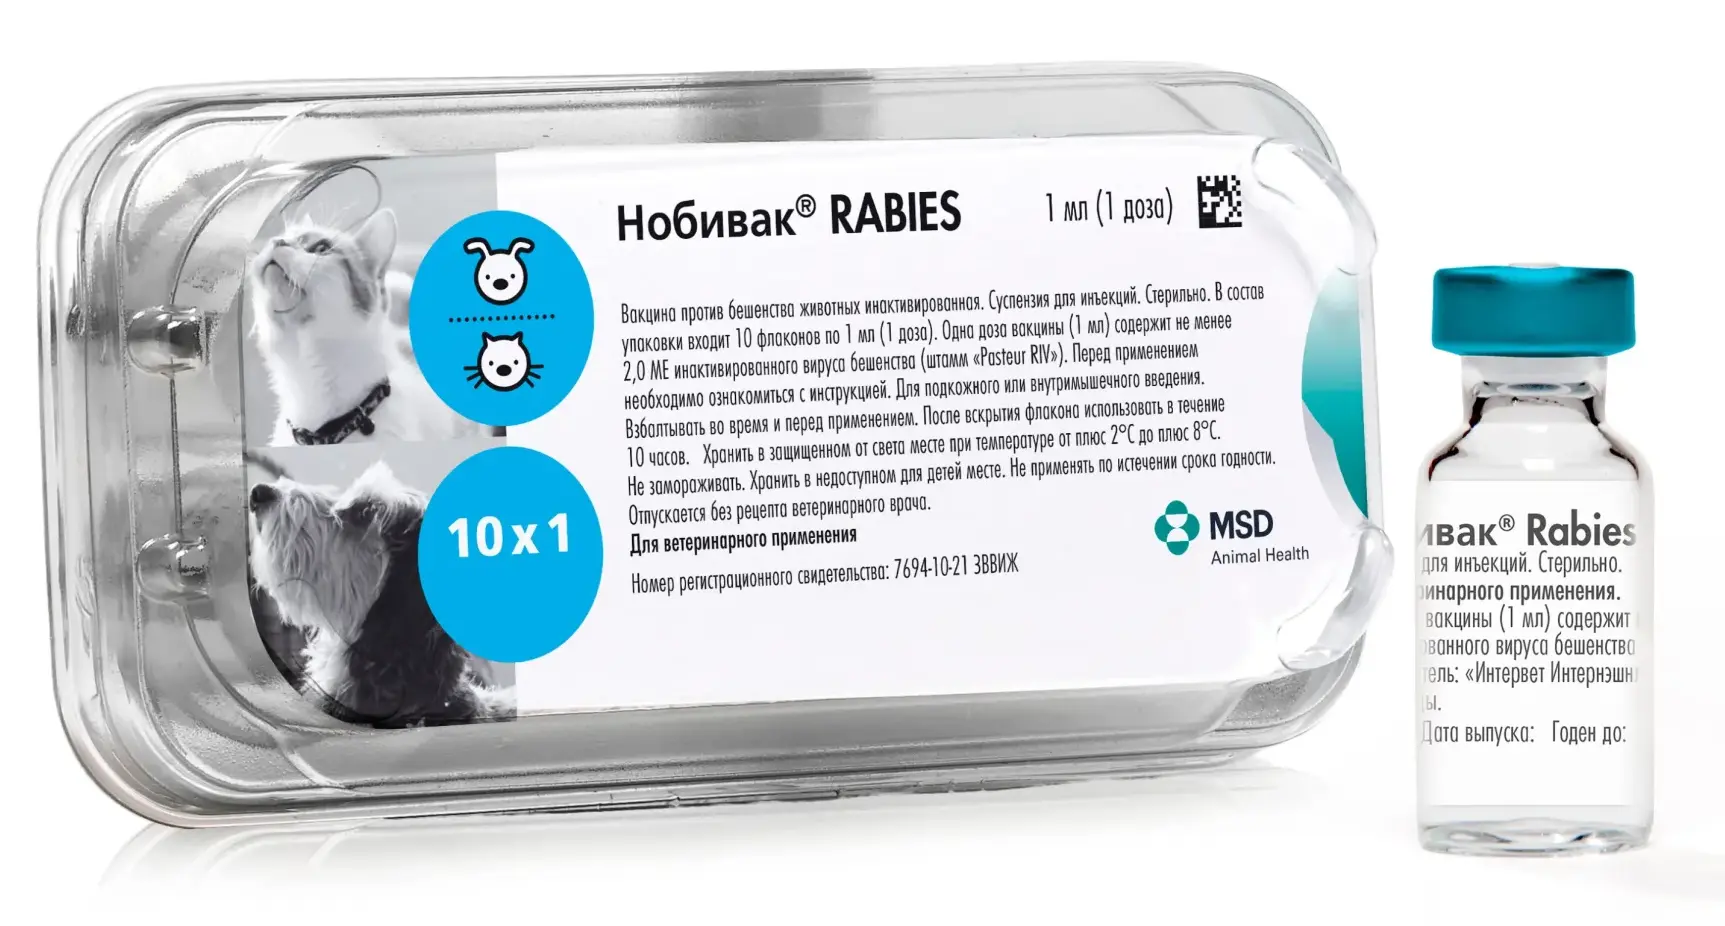 MSD Animal Health Нобивак Rabies